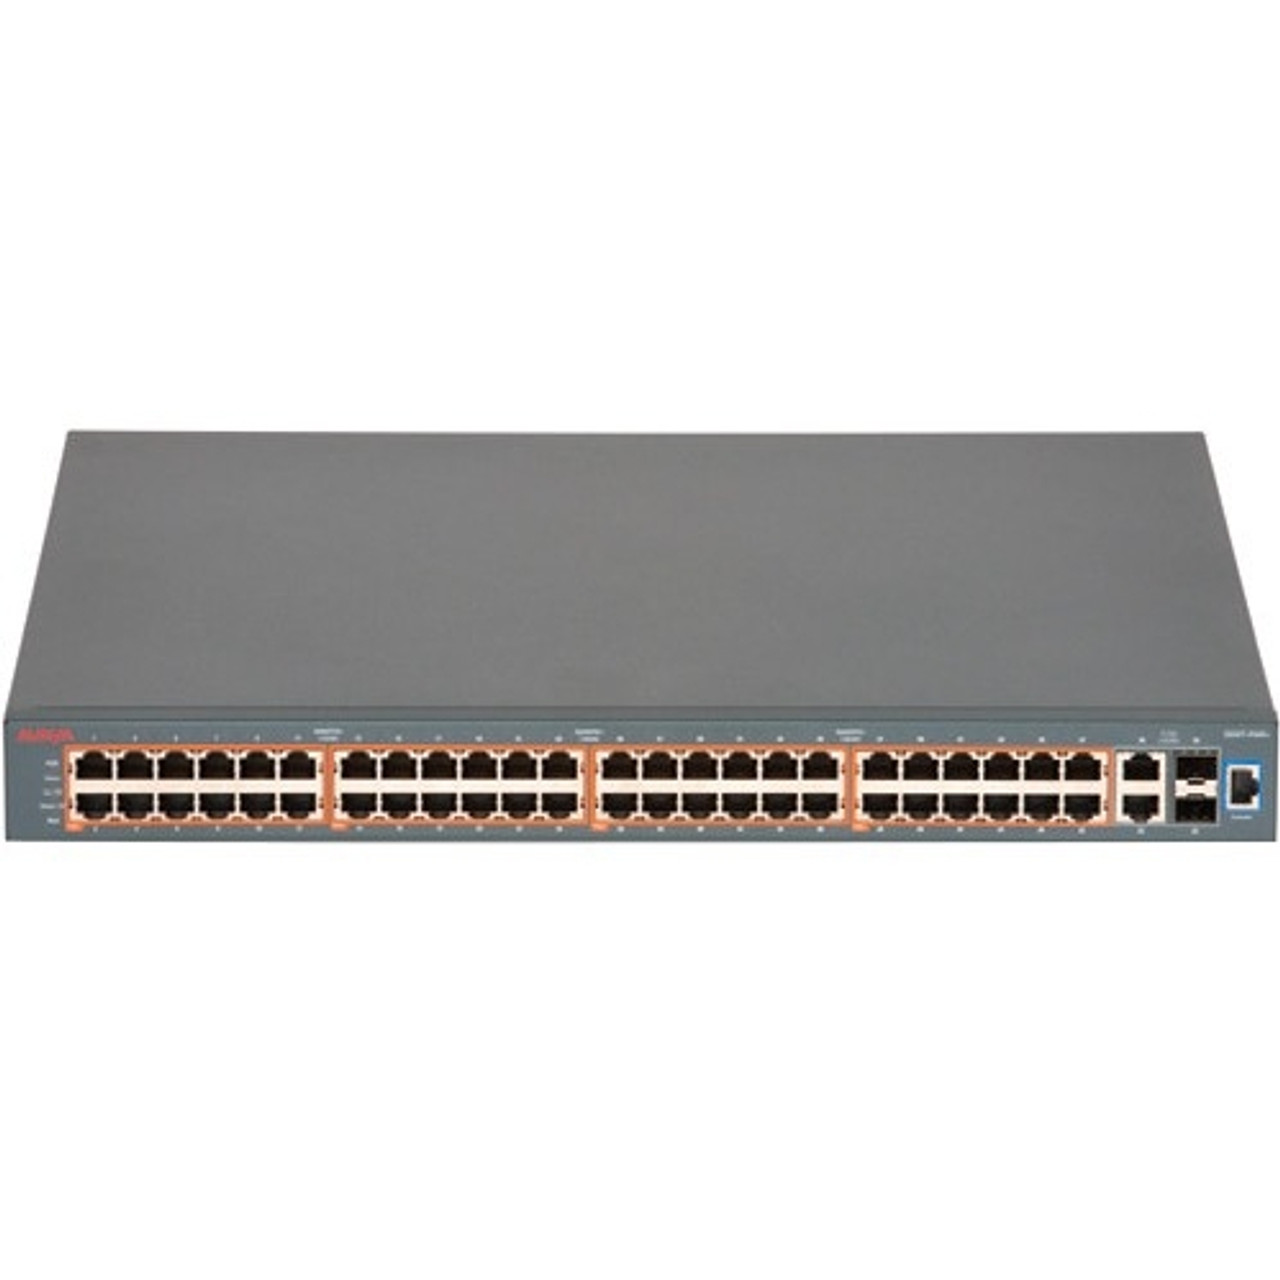 AL3500C12-E6 Avaya ERS 3550T-PWR+ Ethernet Switch (Refurbished)